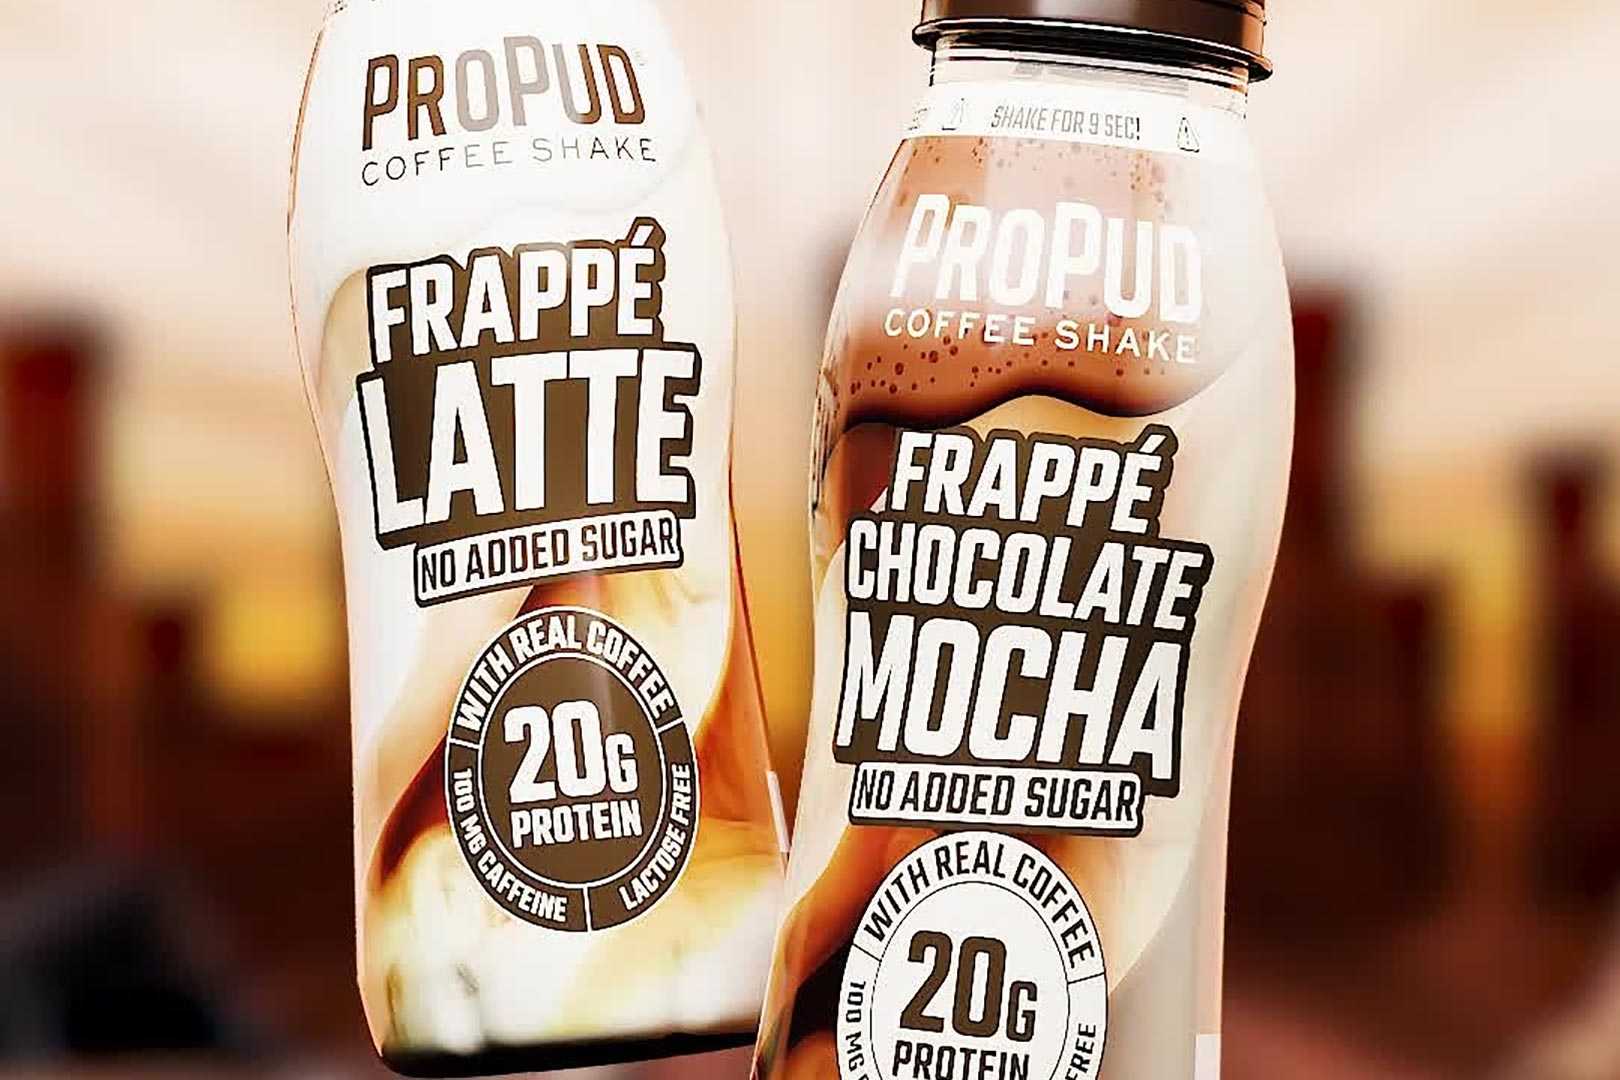 Propud Coffee Shake